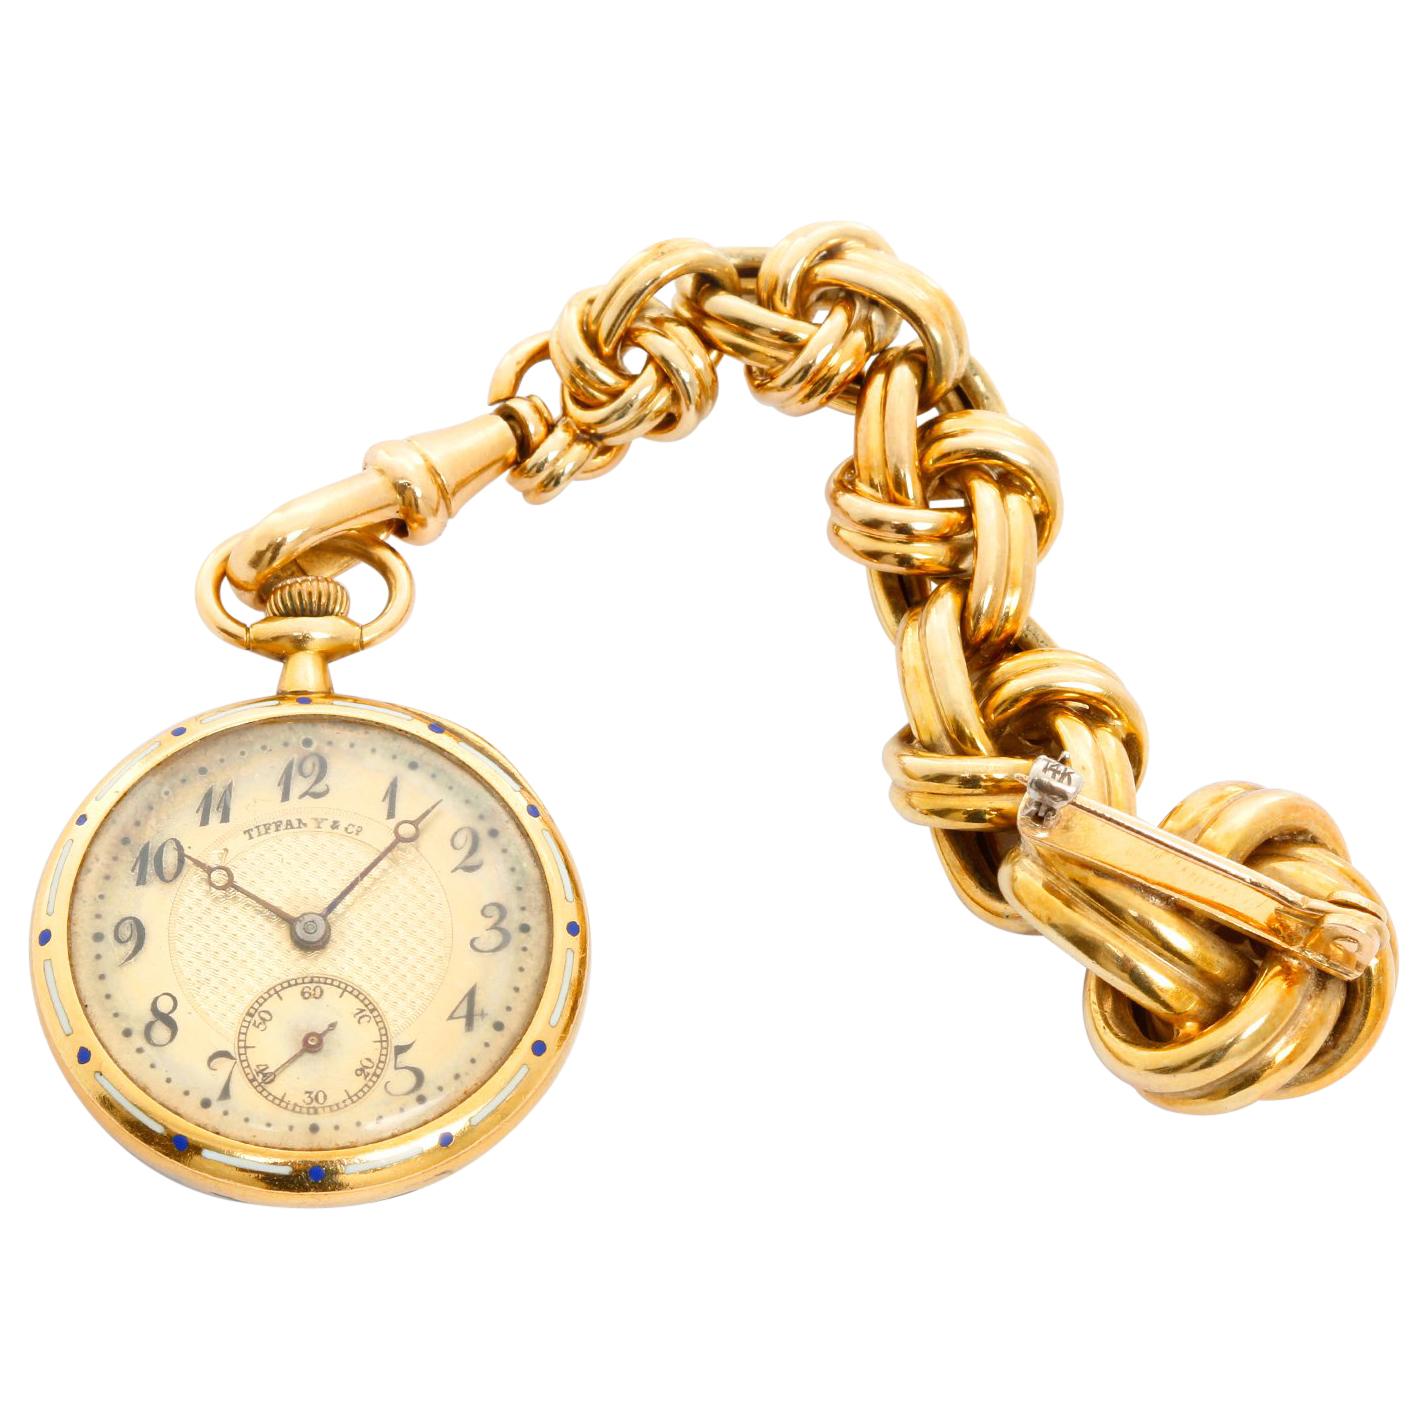 Tiffany & Co. Enameled 14 Karat Yellow Gold Pocket Watch Brooch